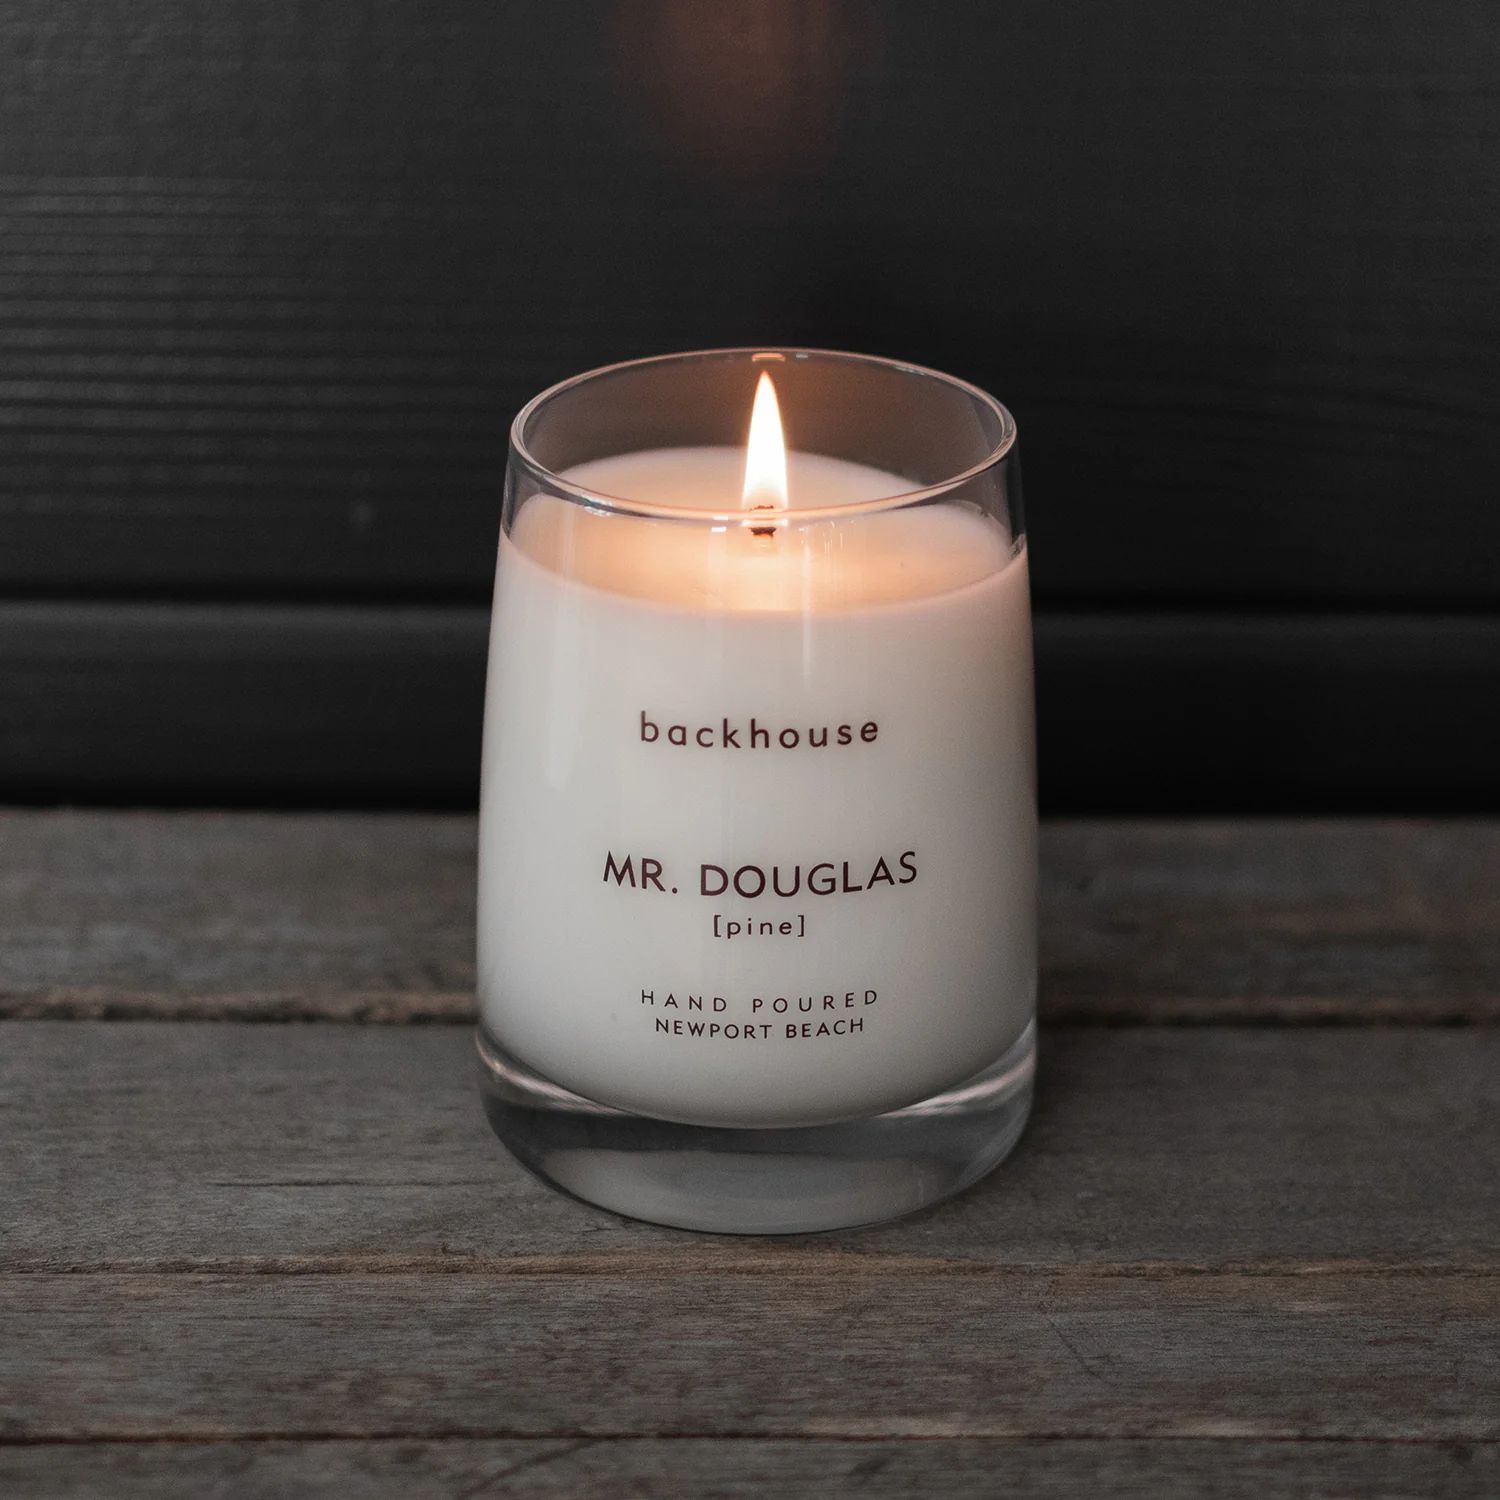 MR. DOUGLAS [pine] | backhouse fragrances